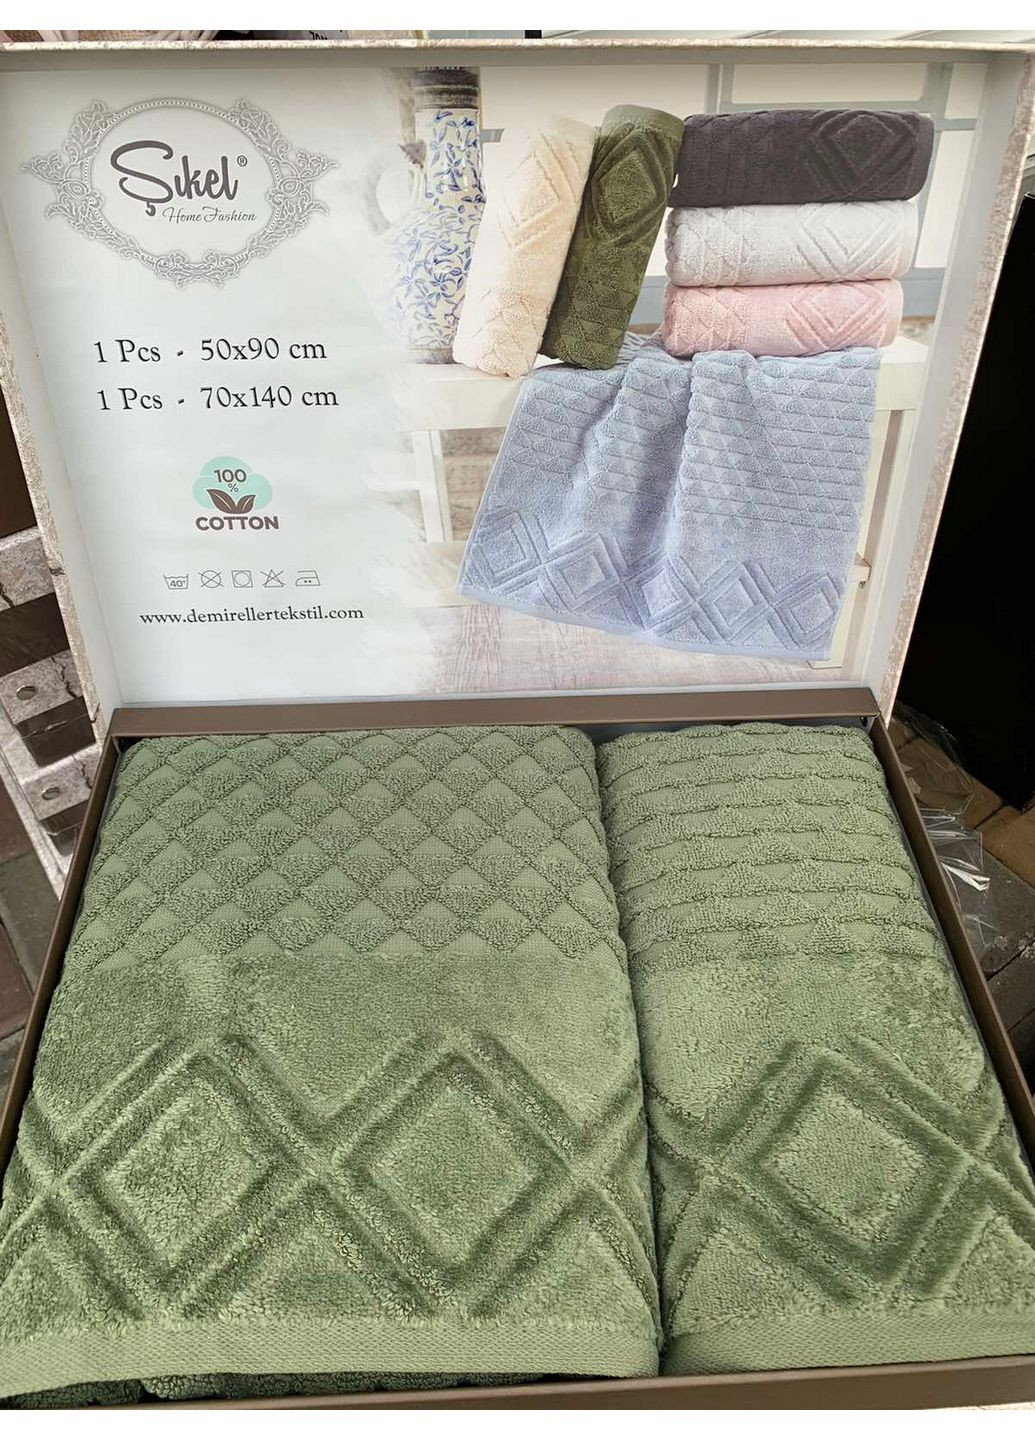 Sikel подарочный набор полотенец 50х90см + 70х140см комбинированный производство -